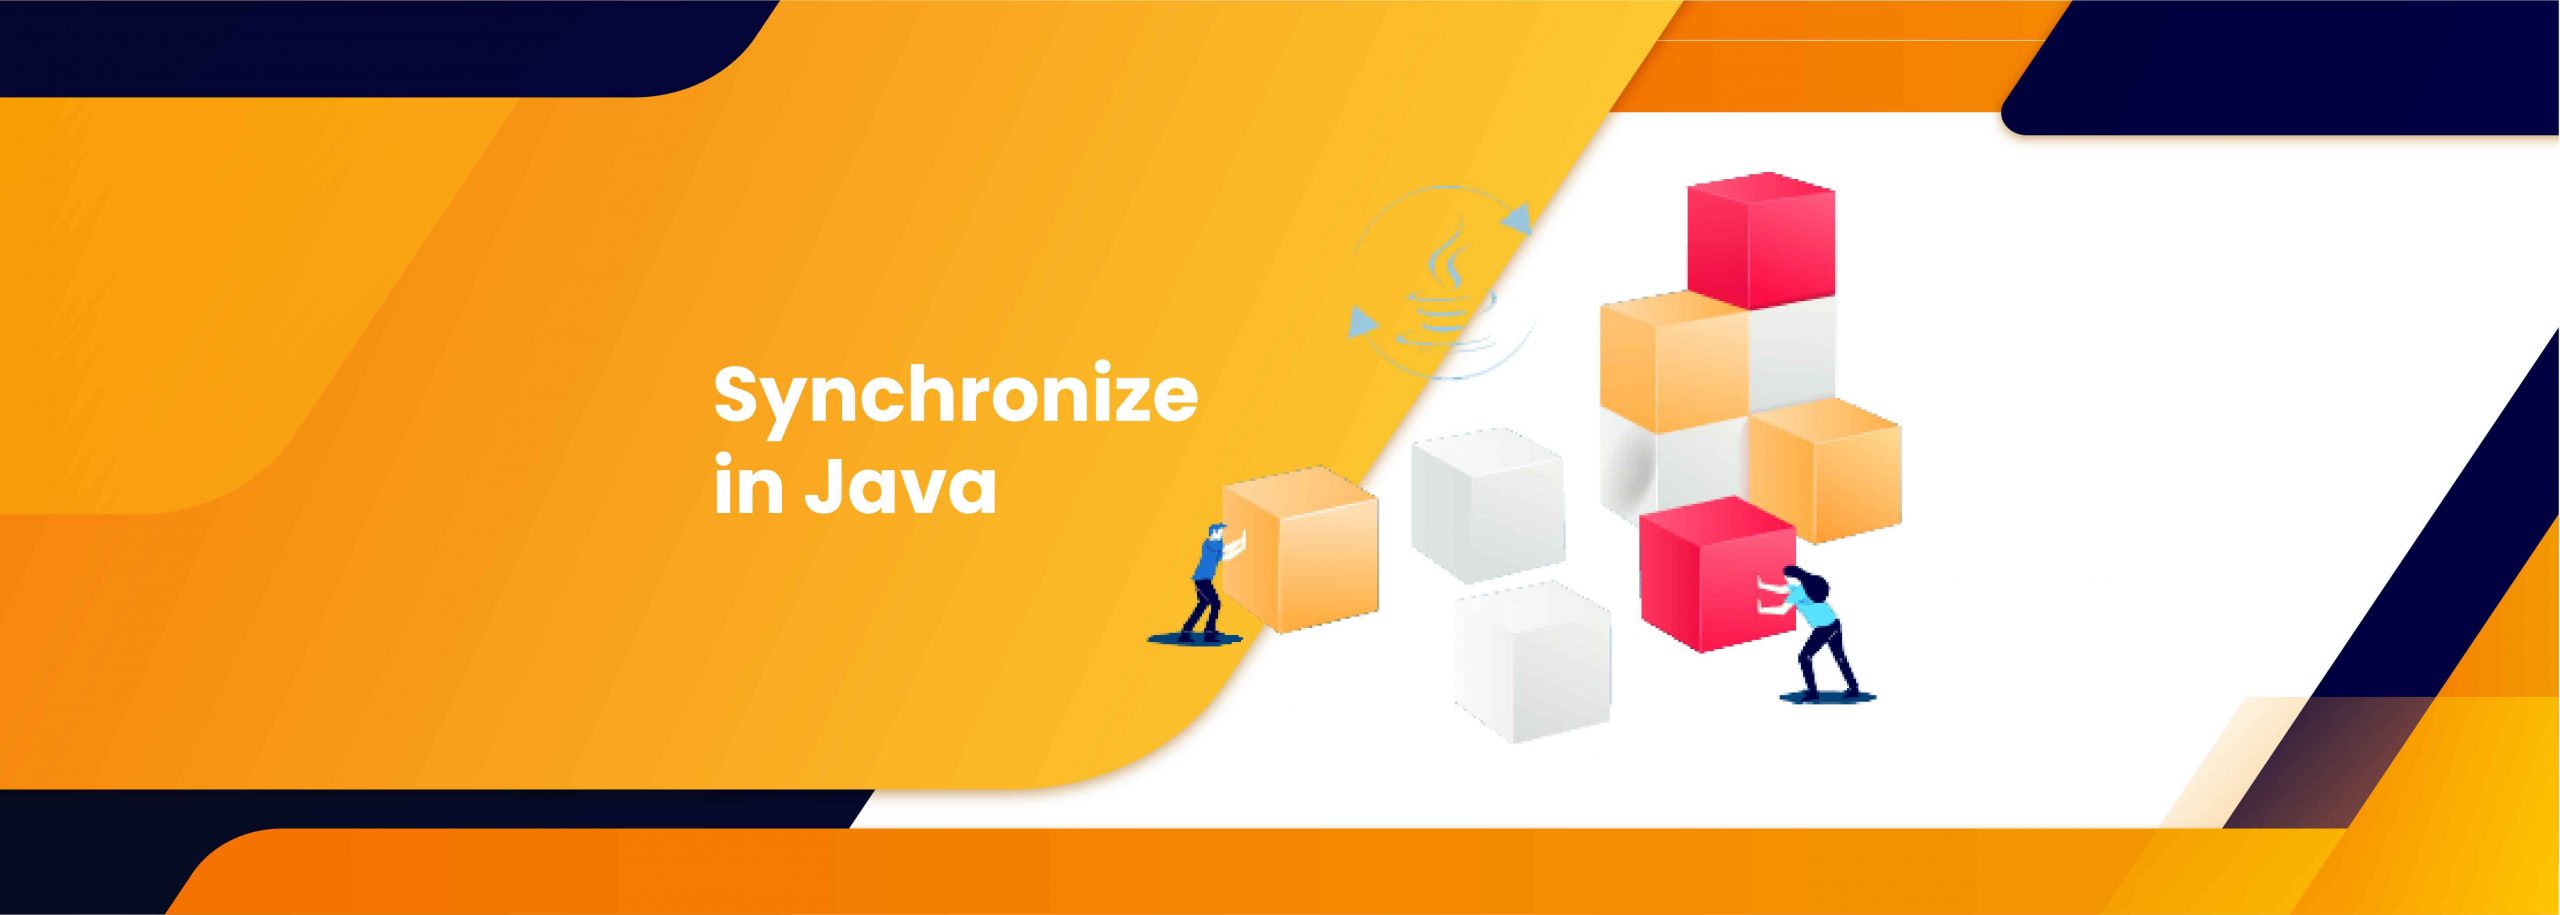 Synchronize in Java